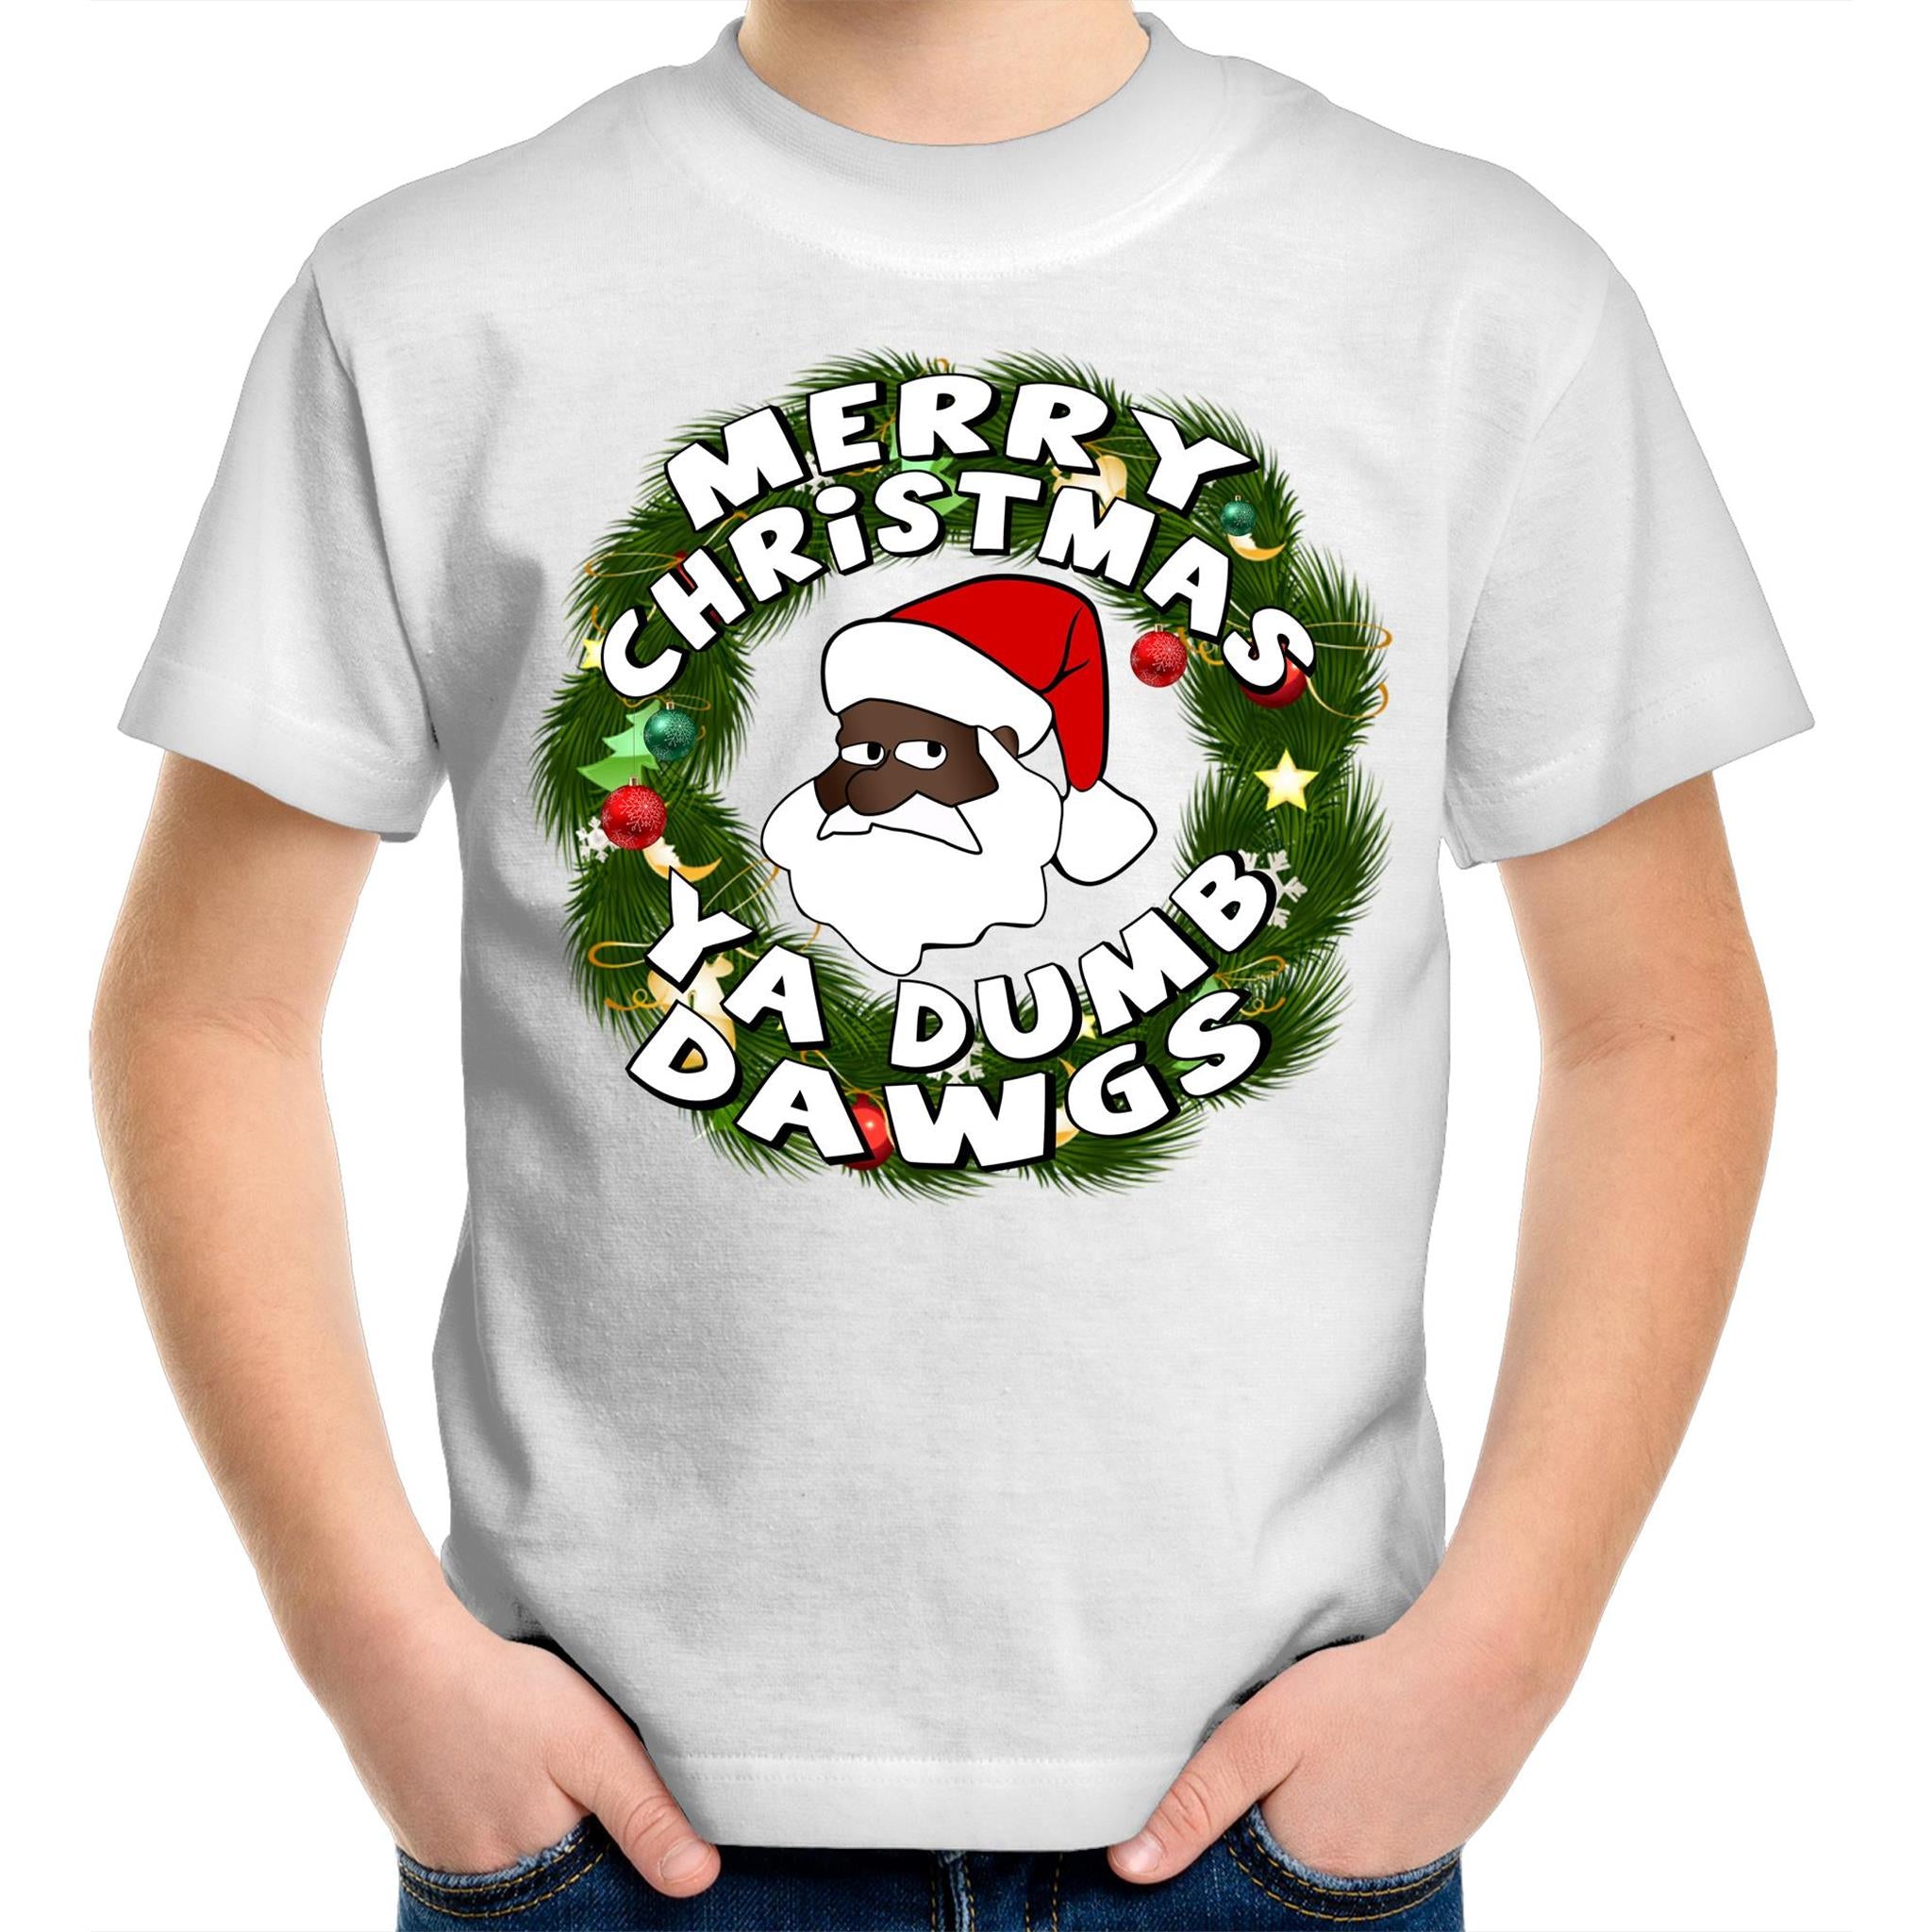 'Merry Christmas Ya Dumb Dawgs' Kids T-Shirt